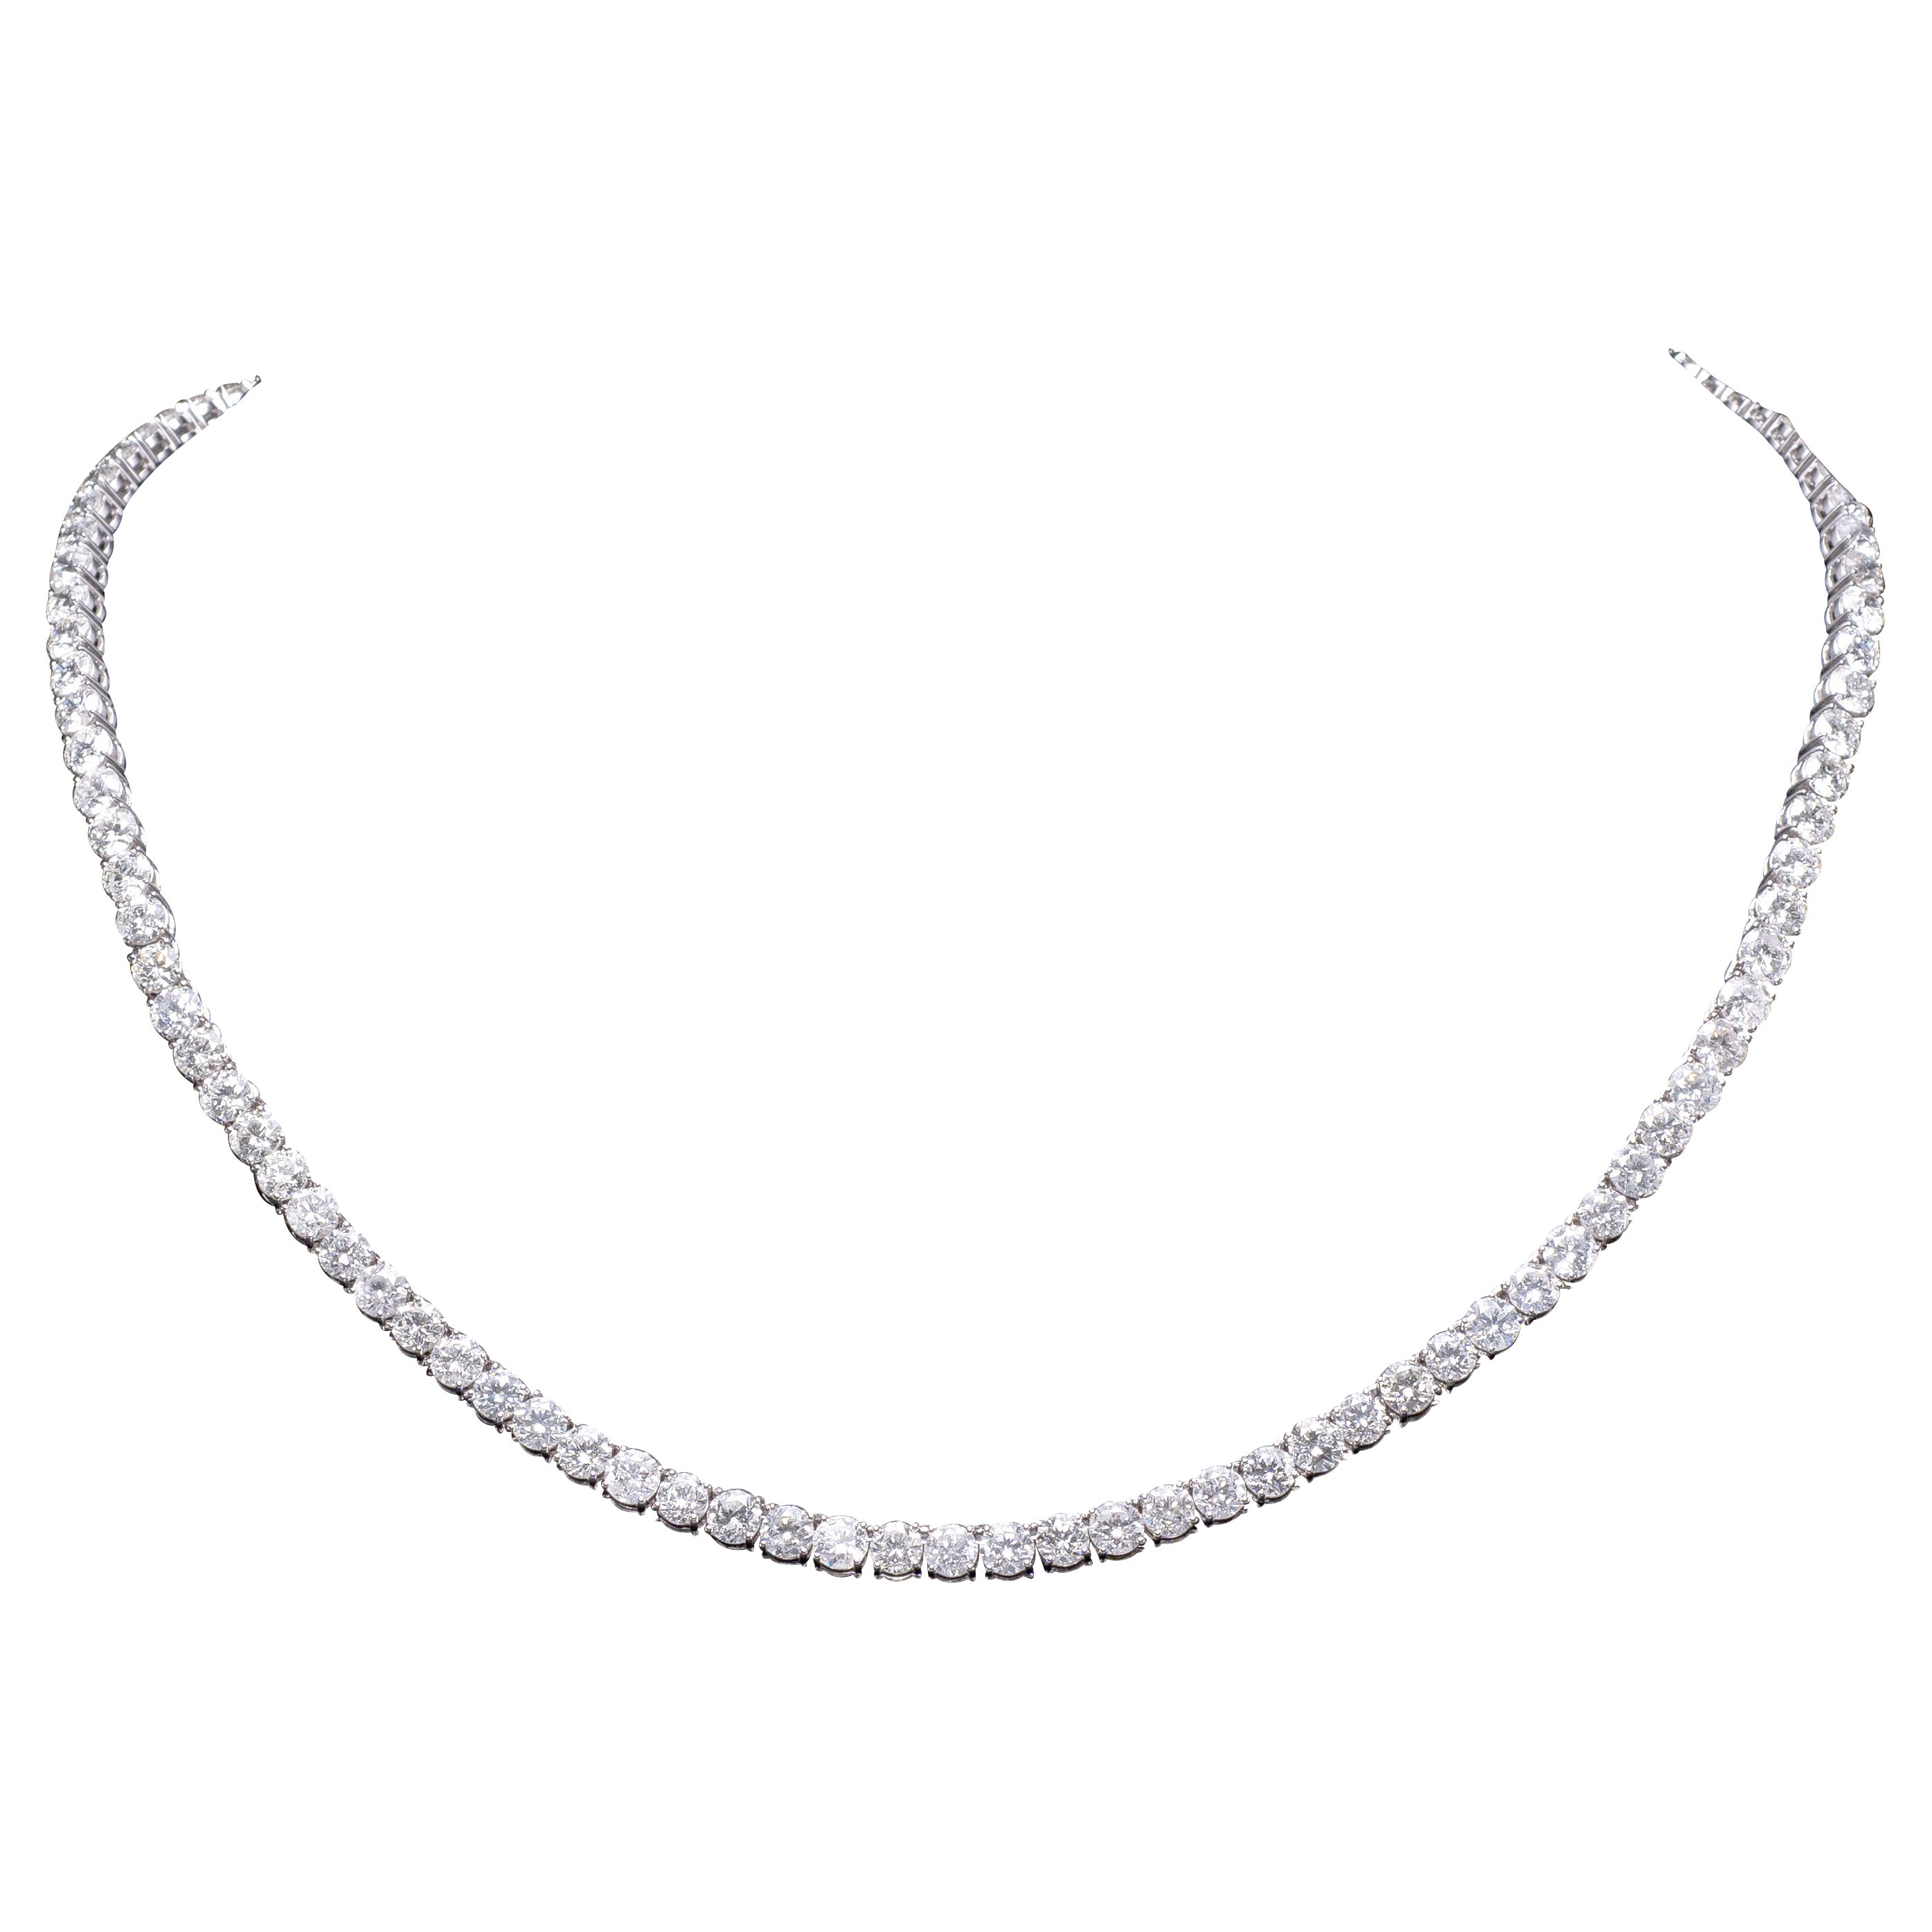 45.0 Carat Round Brilliant White Diamond Necklace in 18K White Gold For Sale